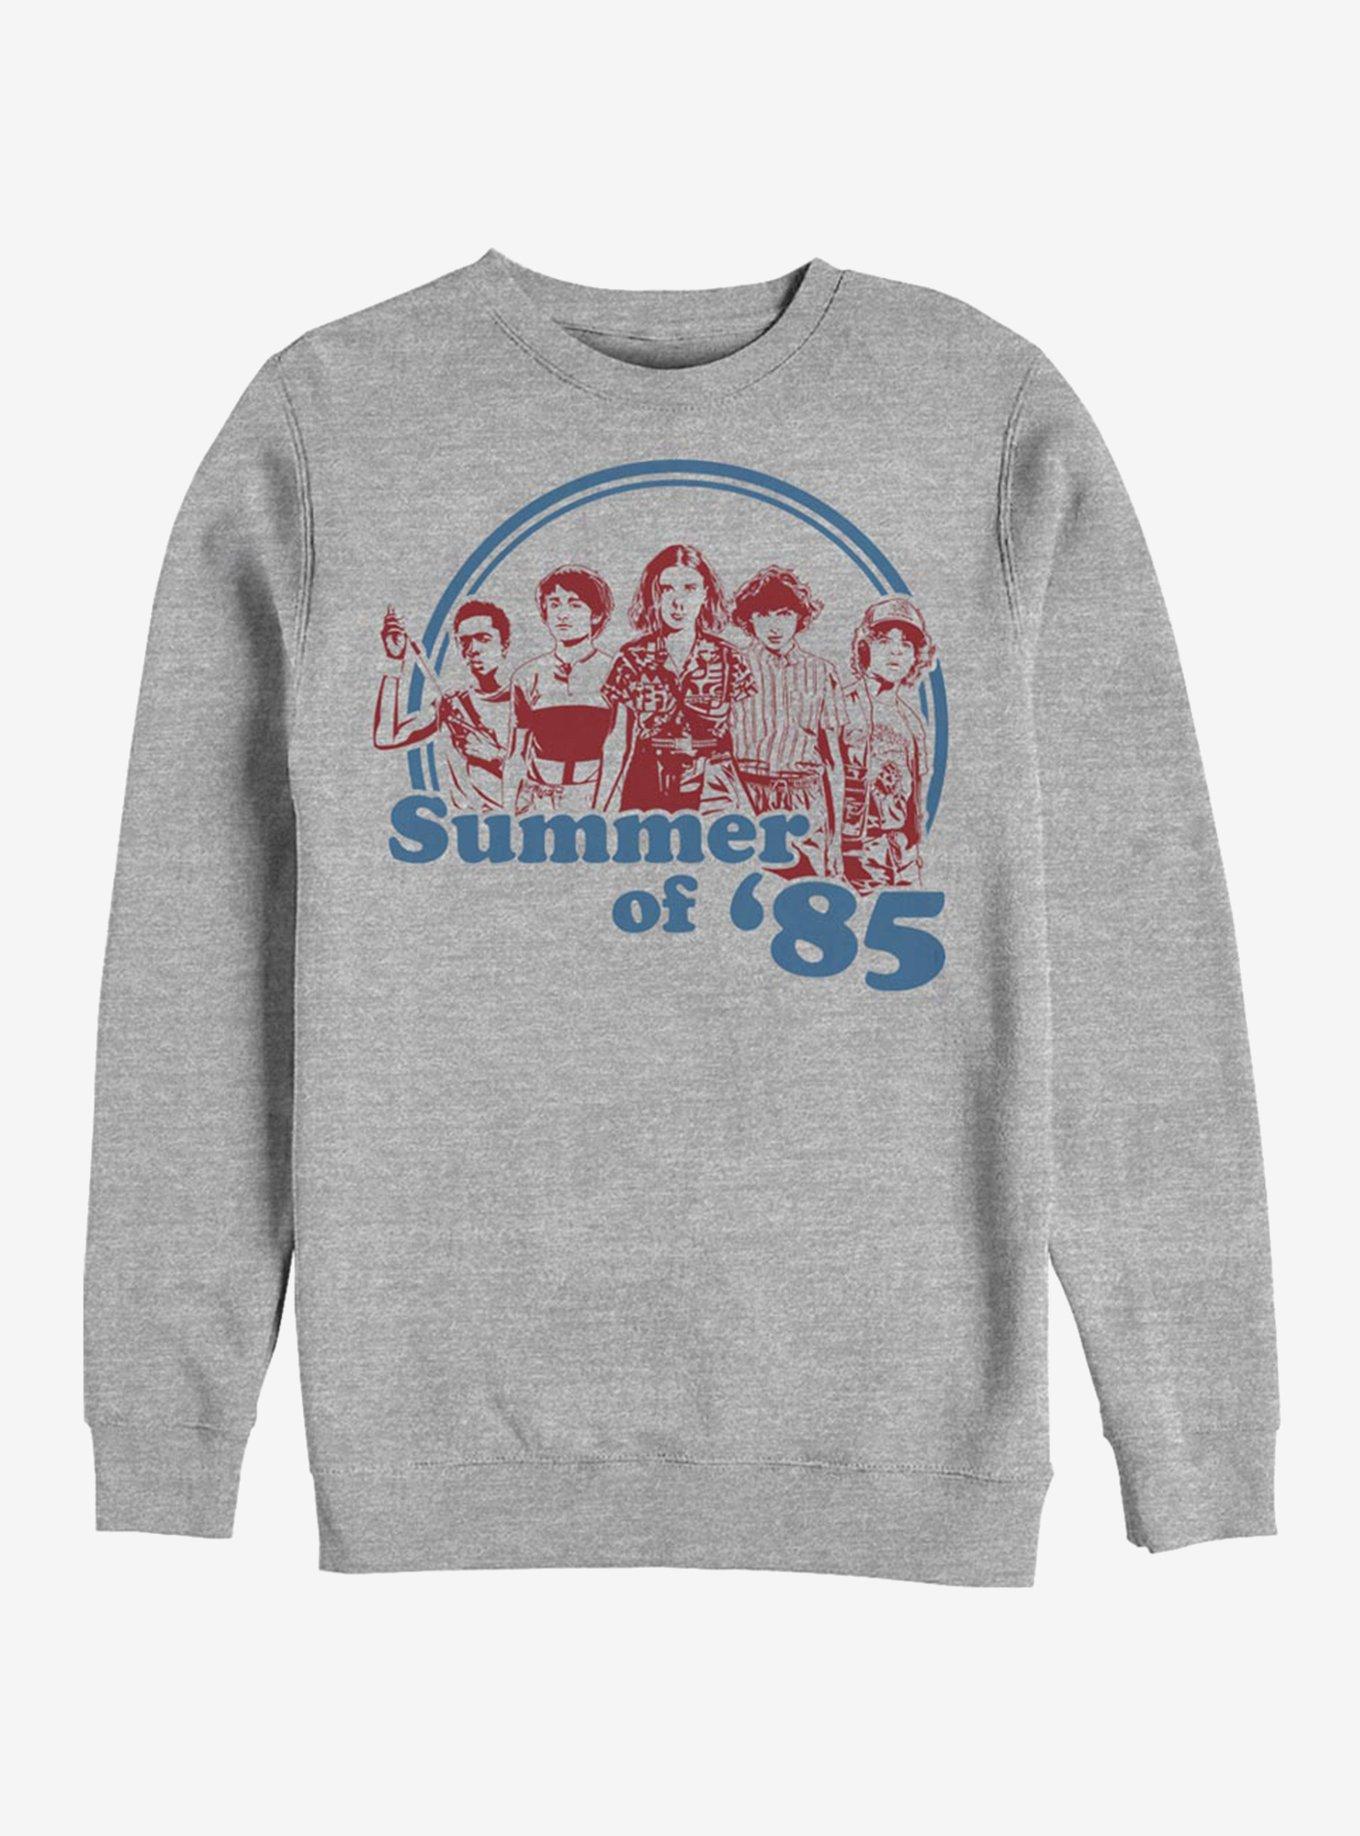 Stranger Things Group Summer of 85 Crew Sweatshirt